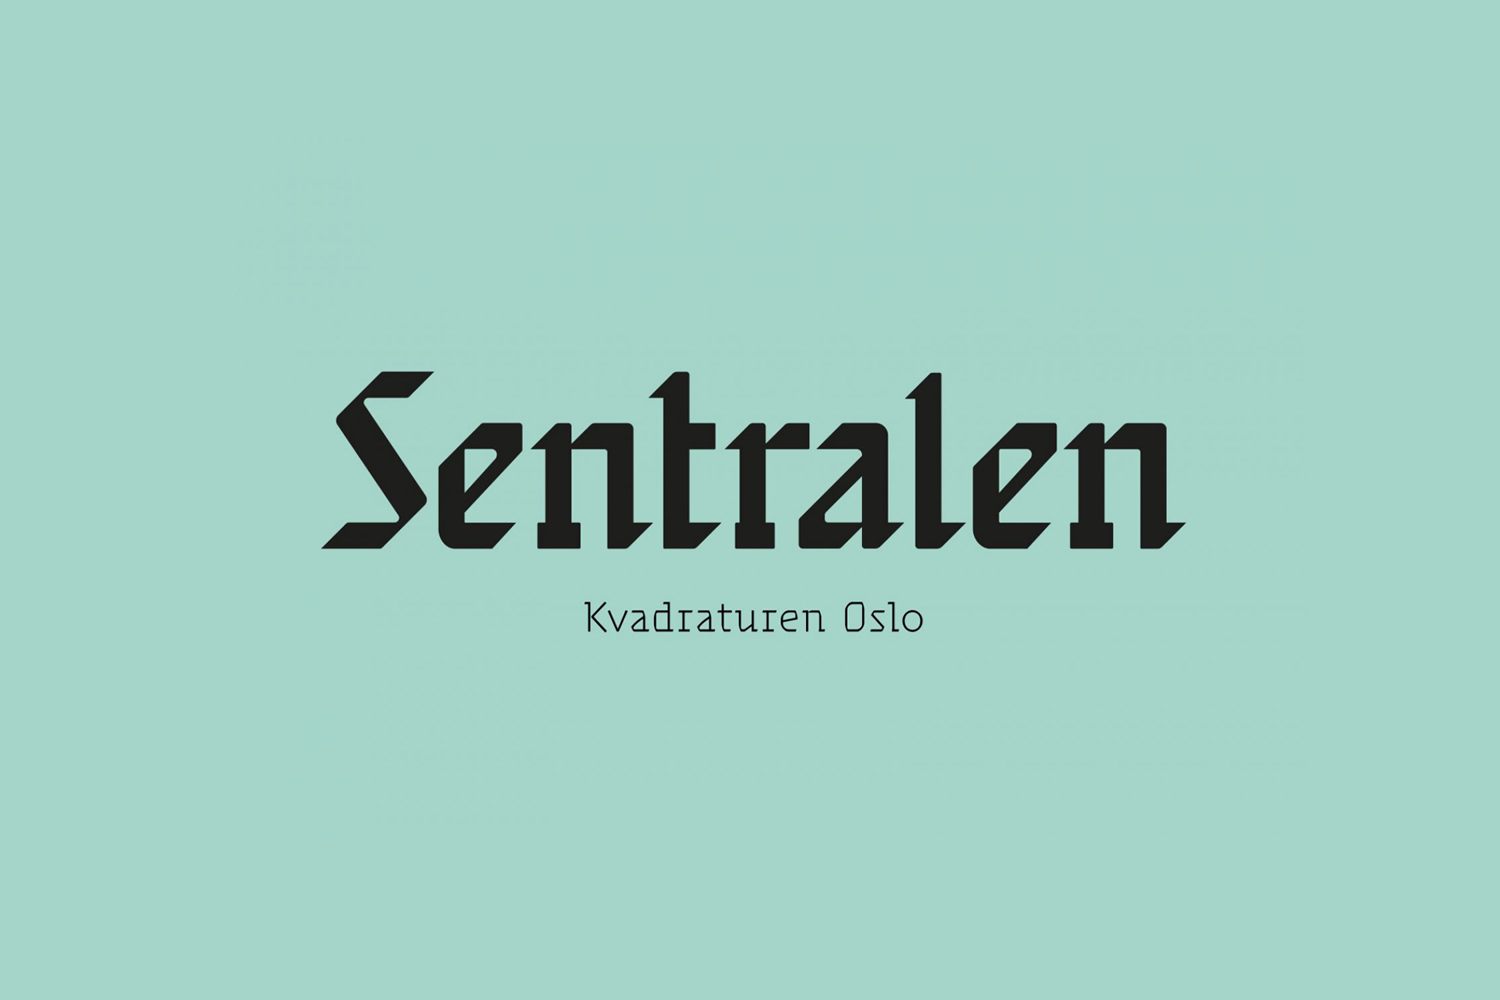 Creative Logotype Gallery & Inspiration: Sentralen by Metric Design & Ellmer Stefan, Norway